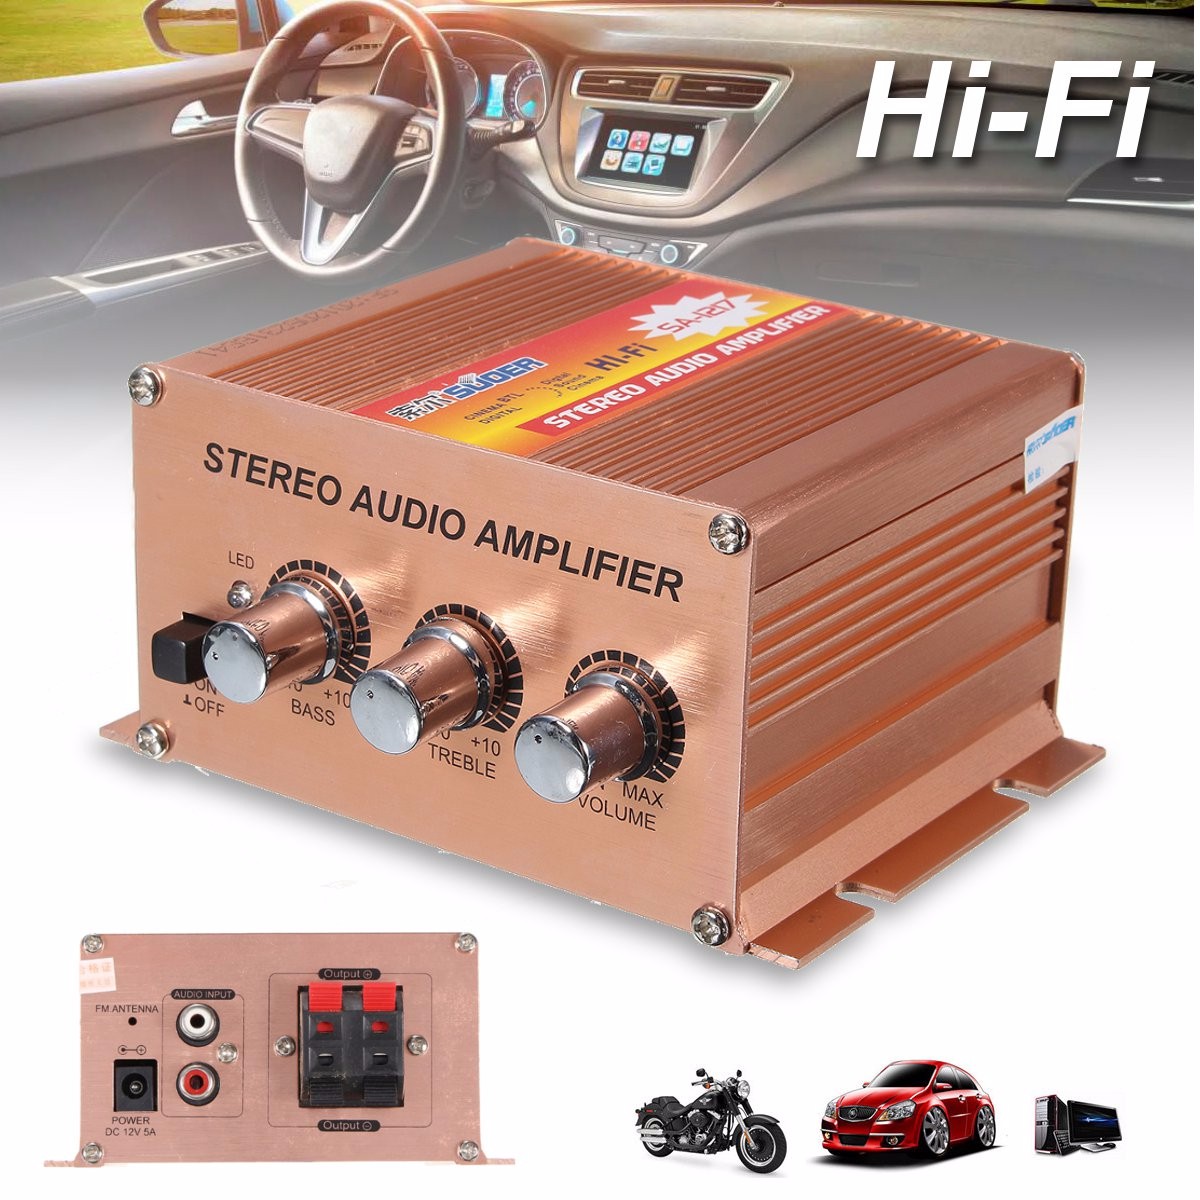 Suoertrade-SA-1217-Mini-Hi-Fi-500W-21CH-Channel-Stereo-Audio-Amplifier-for-Car-Auto-Motorcycle-1114674